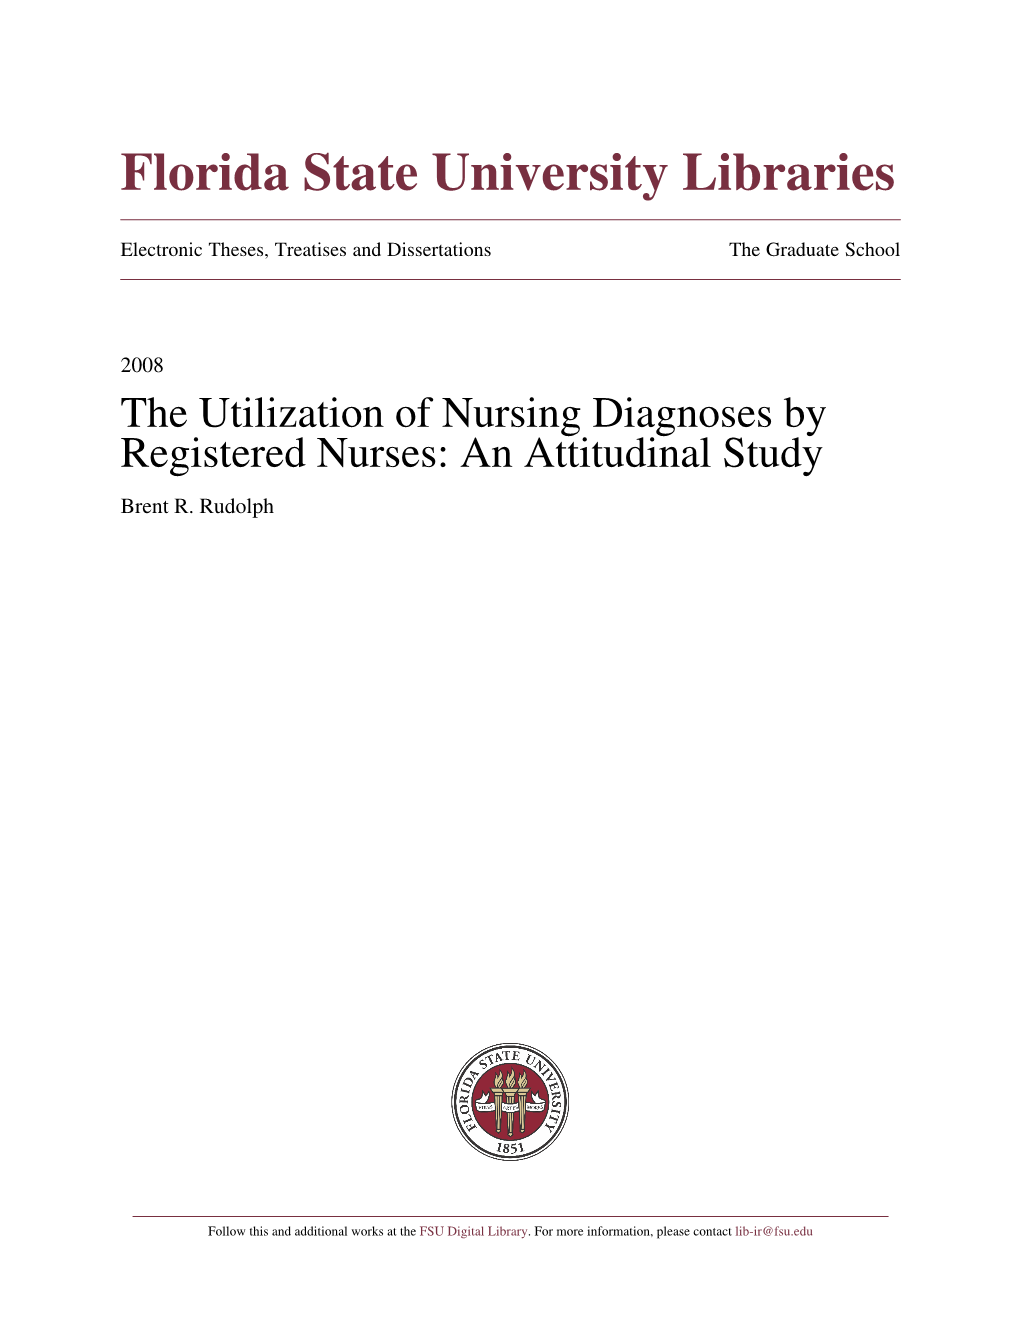 The Utilization of Nursing Diagnoses by Registered Nurses; An